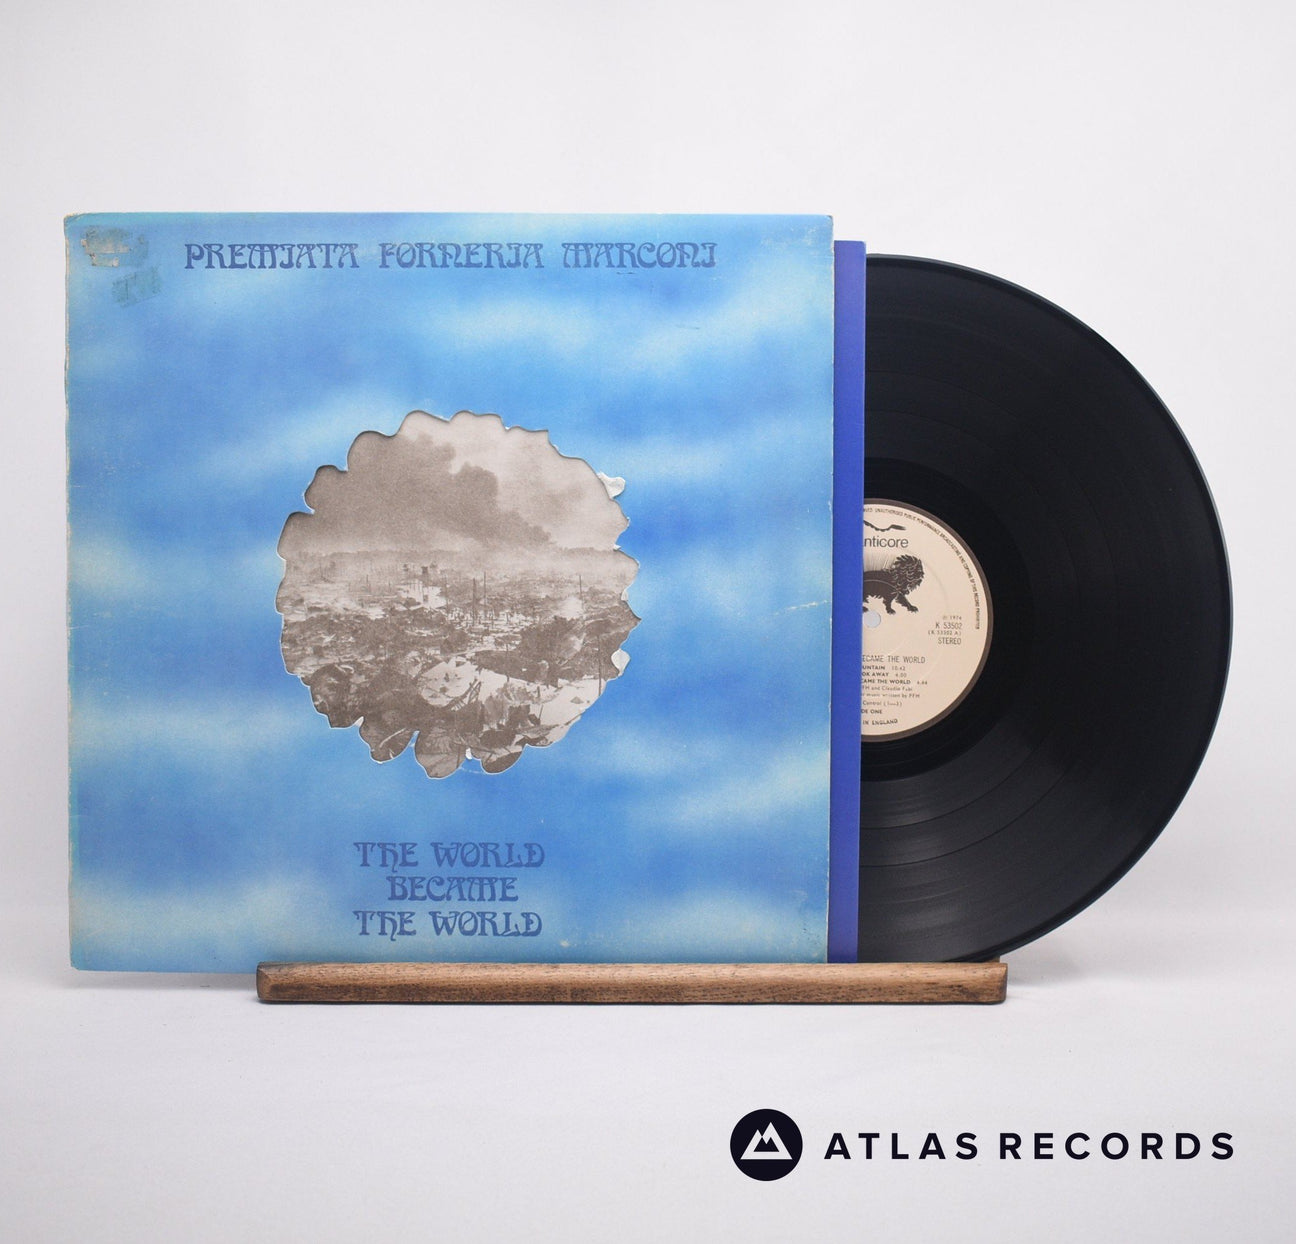 Premiata Forneria Marconi The World Became The World LP Vinyl Record - Front Cover & Record